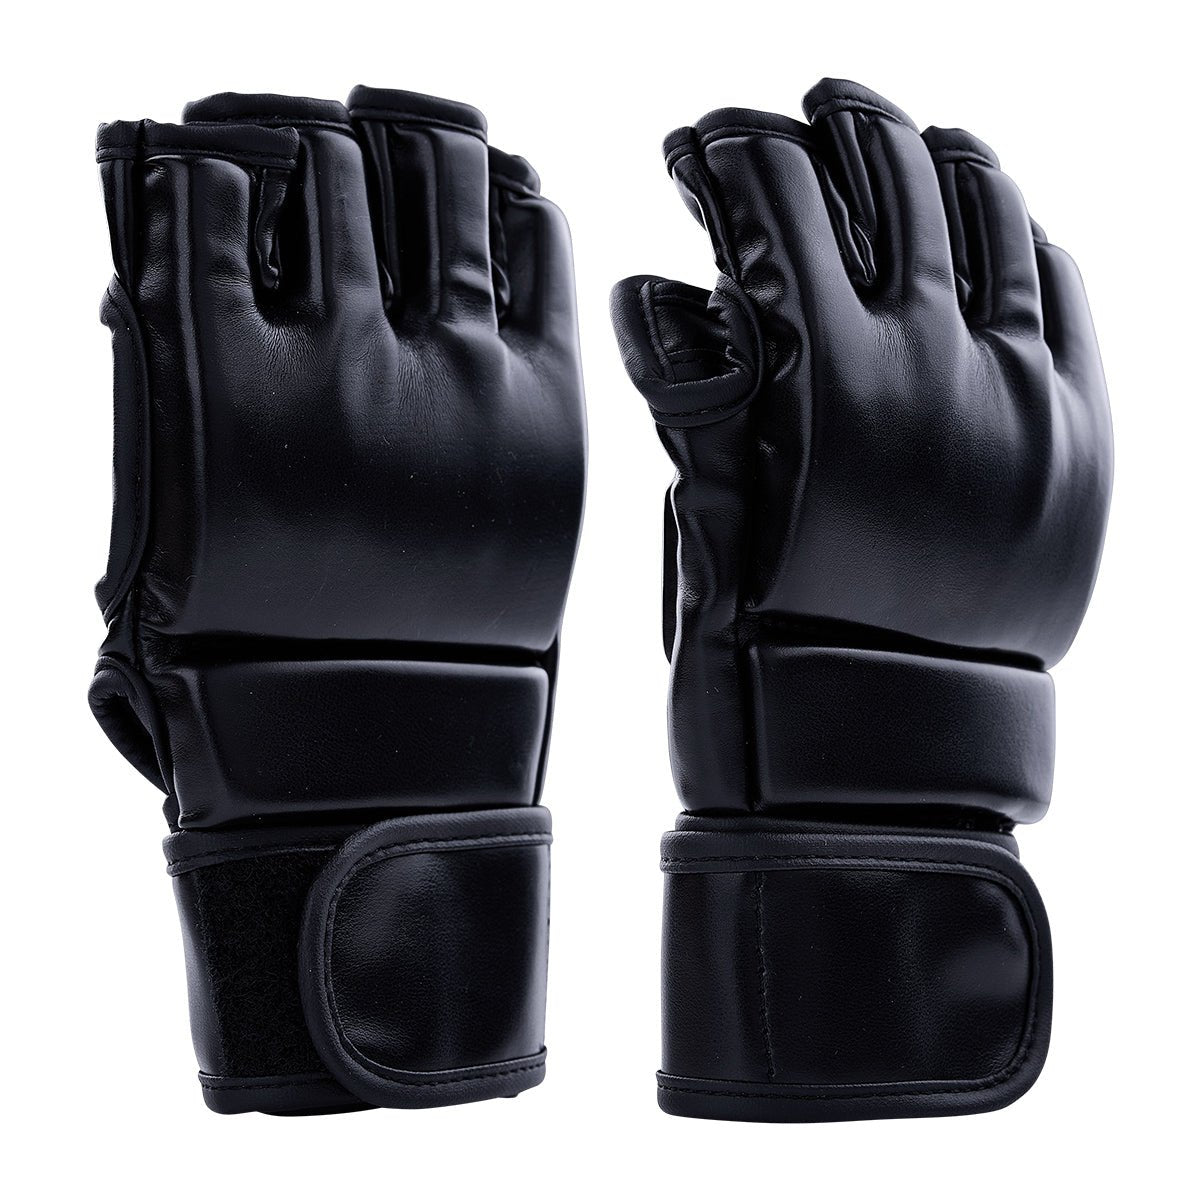 Century Solid MMA Open Palm Glove Black